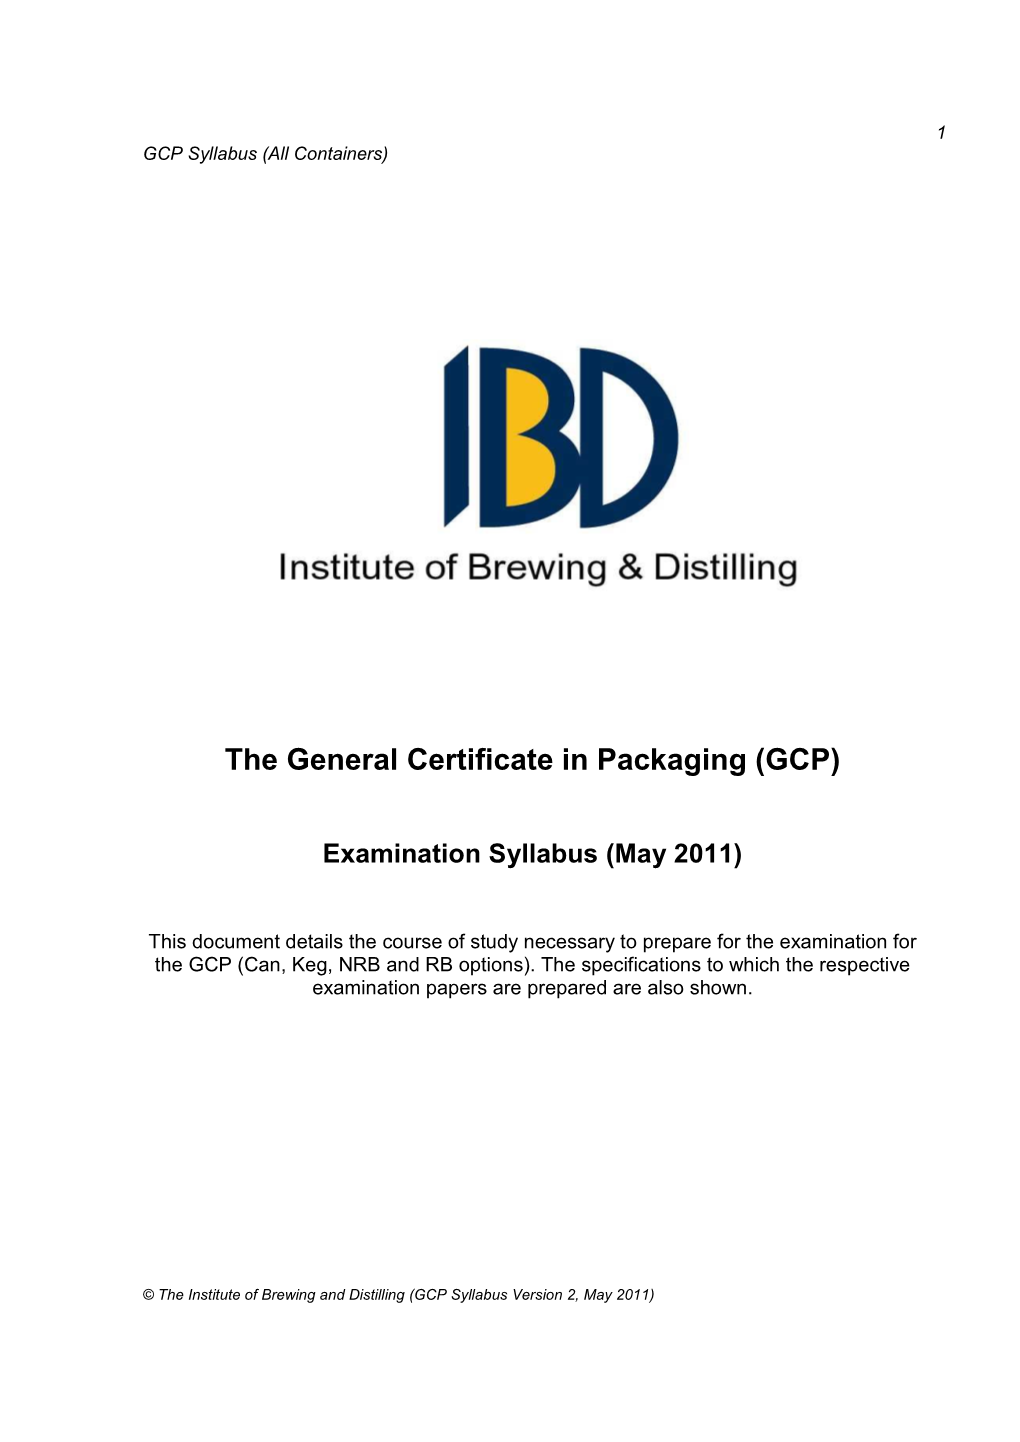 The General Certificate in Packaging (GCP)